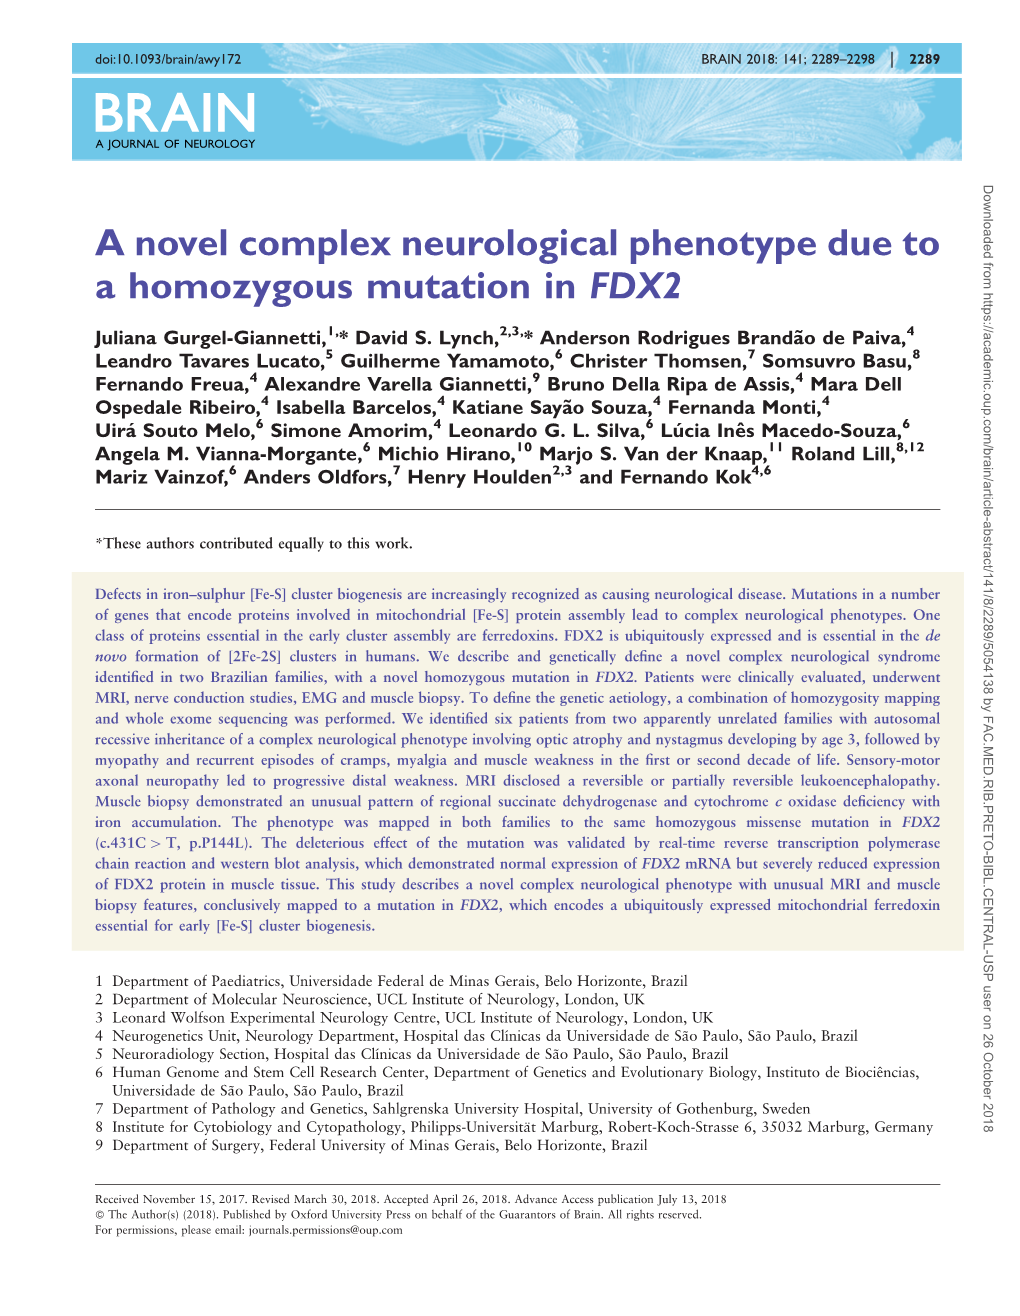 A Novel Complex Neurological Phenotype Due to a Homozygous Mutation in FDX2